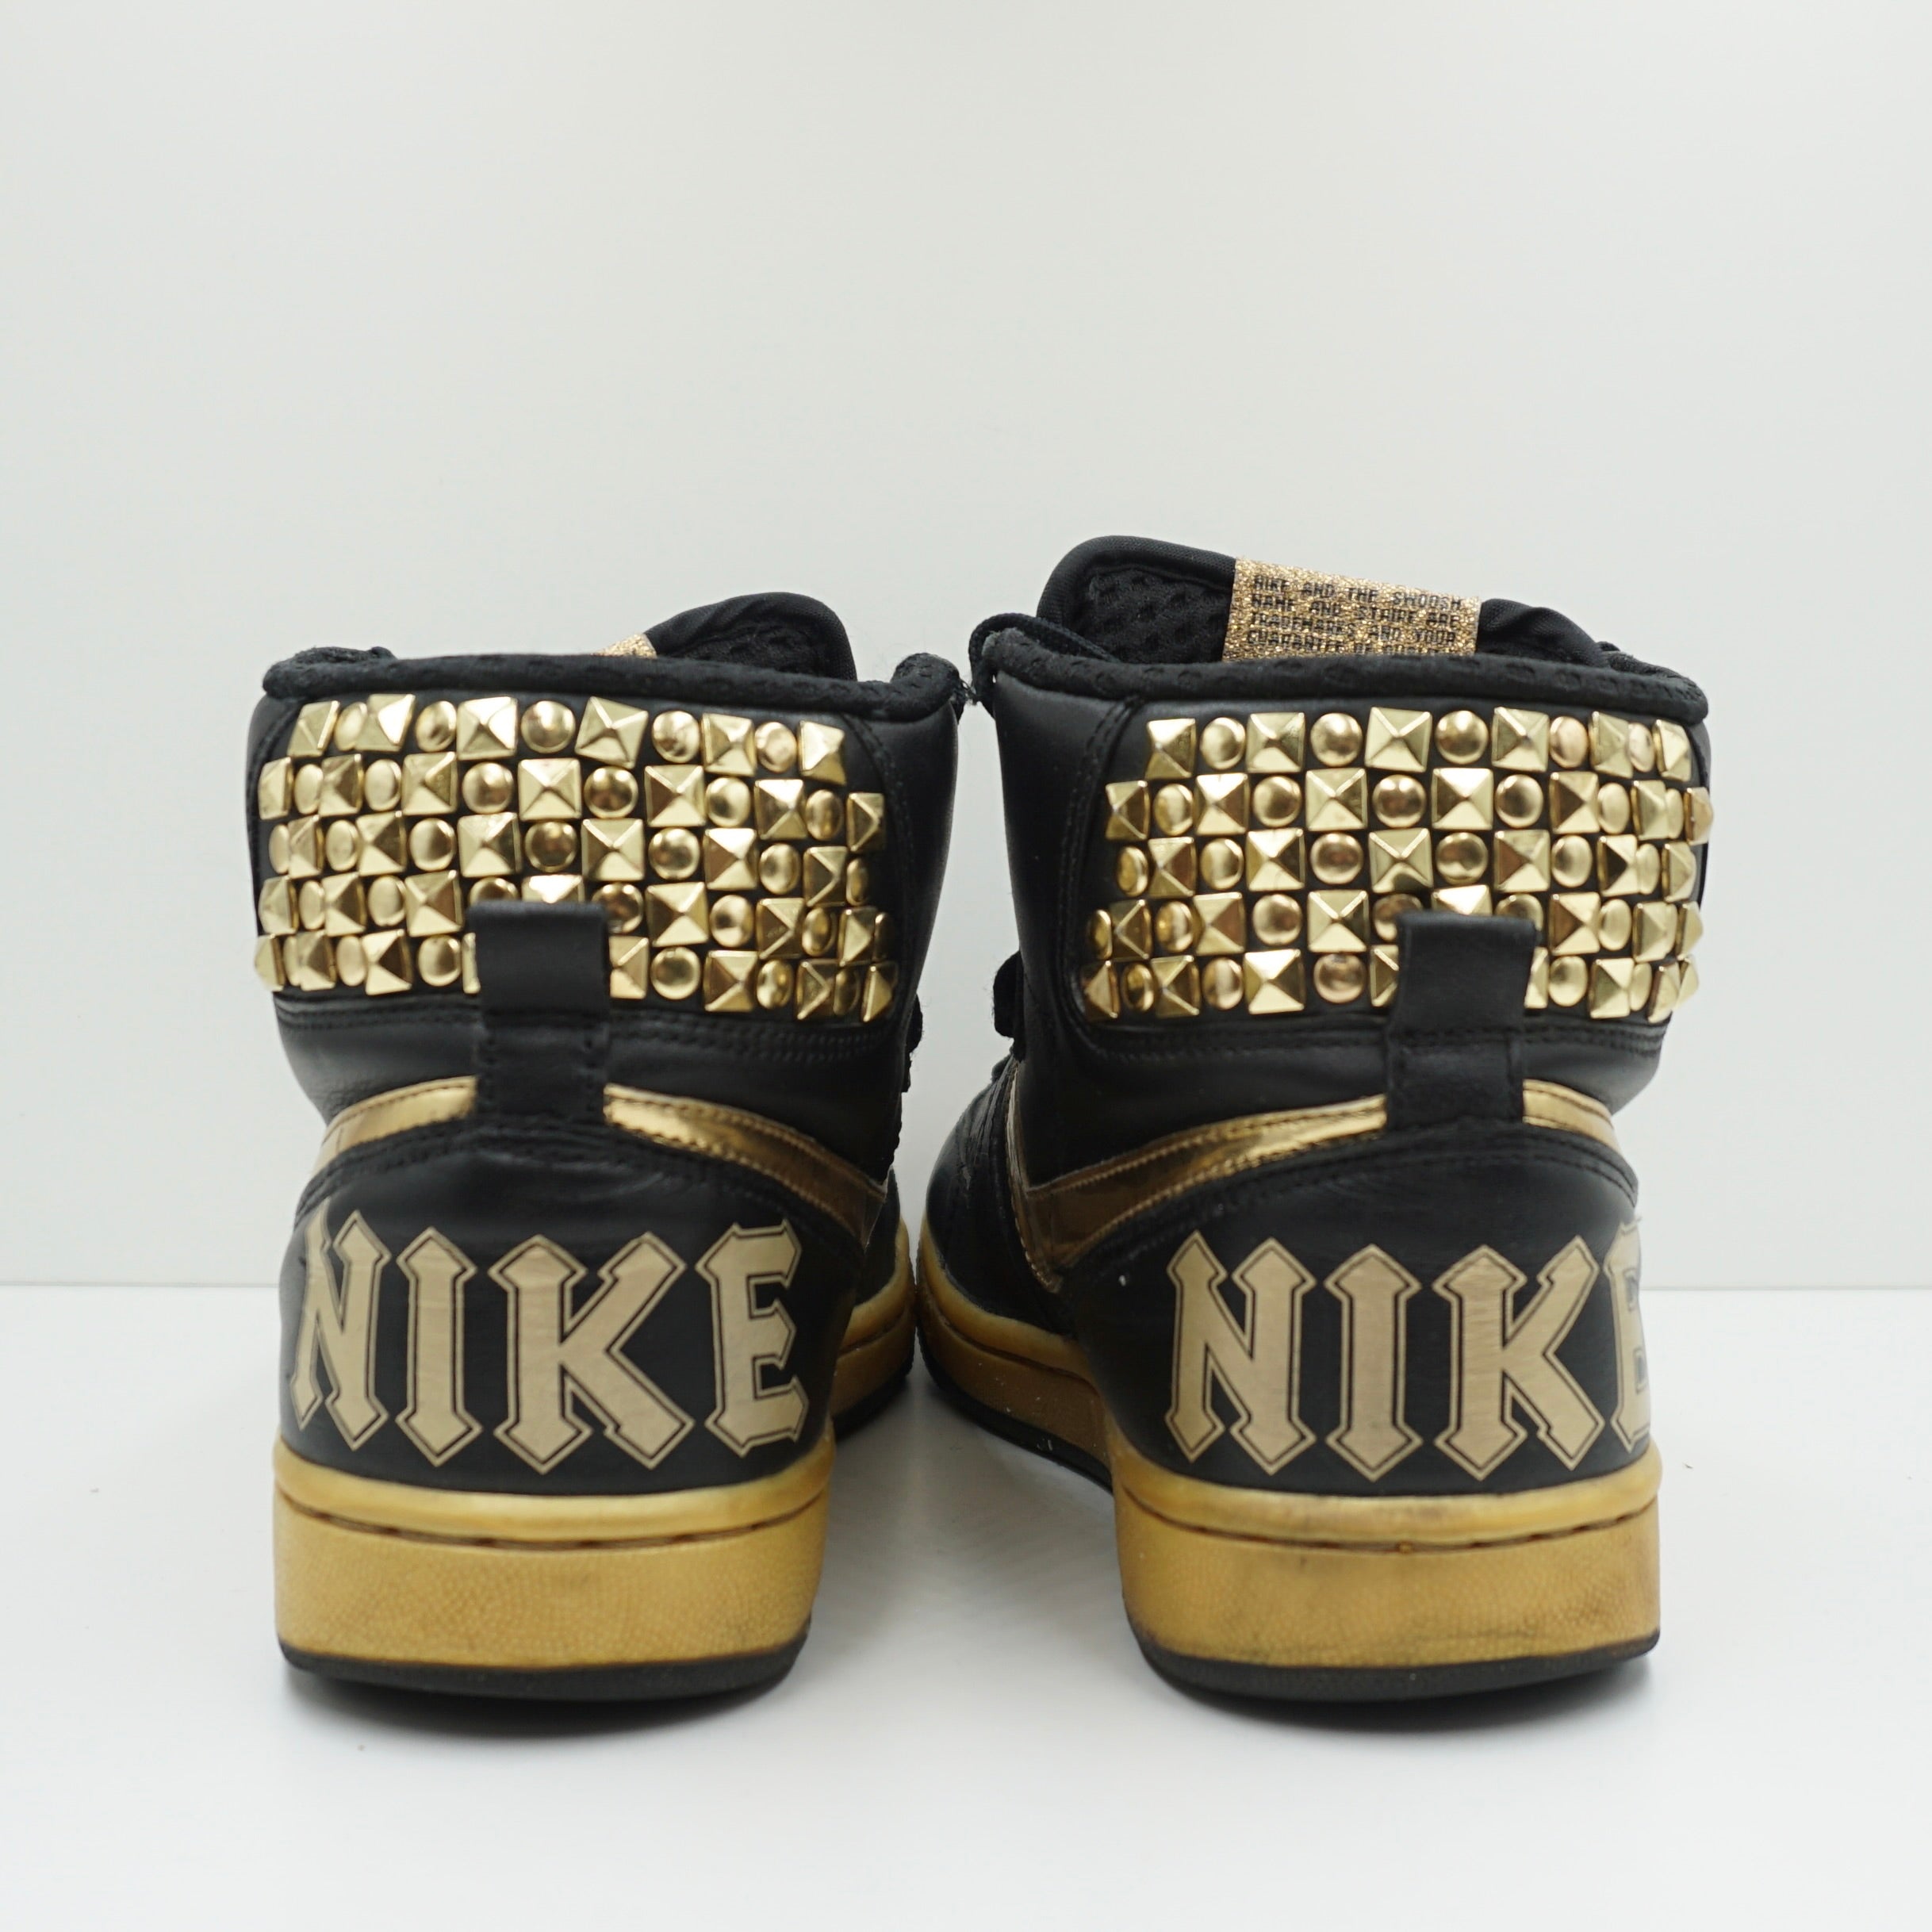 Nike Terminator High Supreme Black/Gold